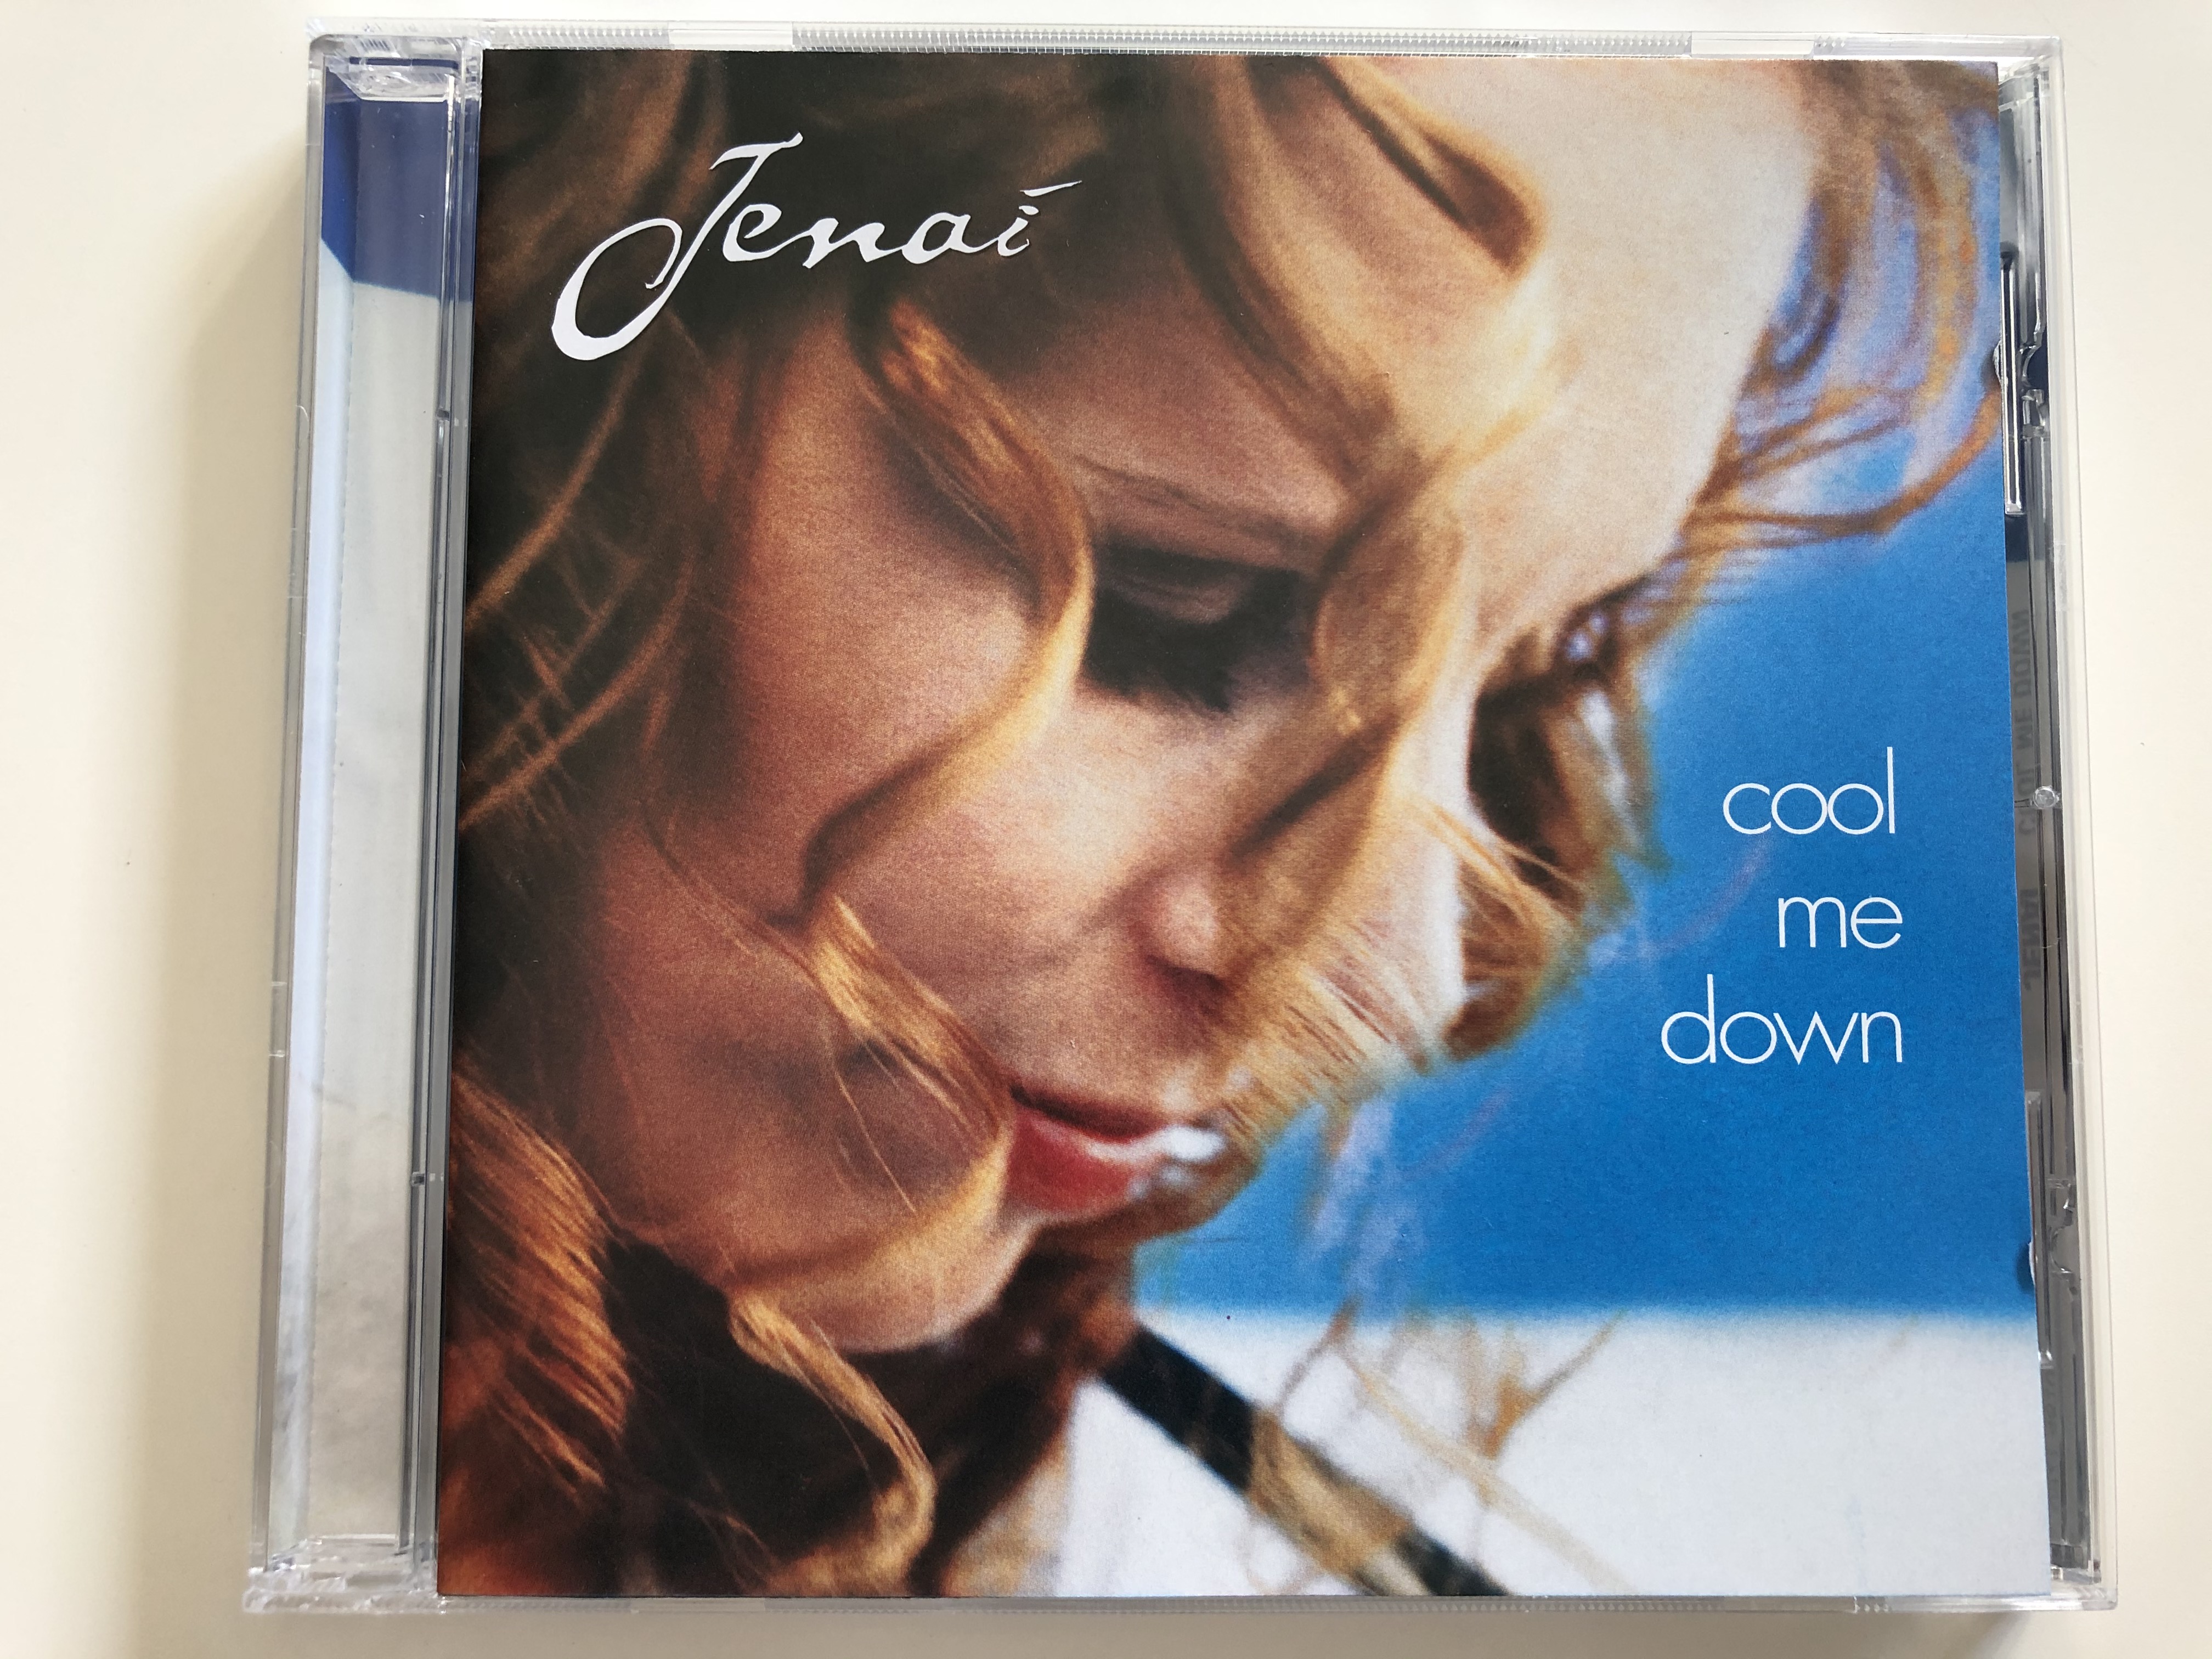 jenai-cool-me-down-curb-records-audio-cd-2002-0927-48103-2-1-.jpg